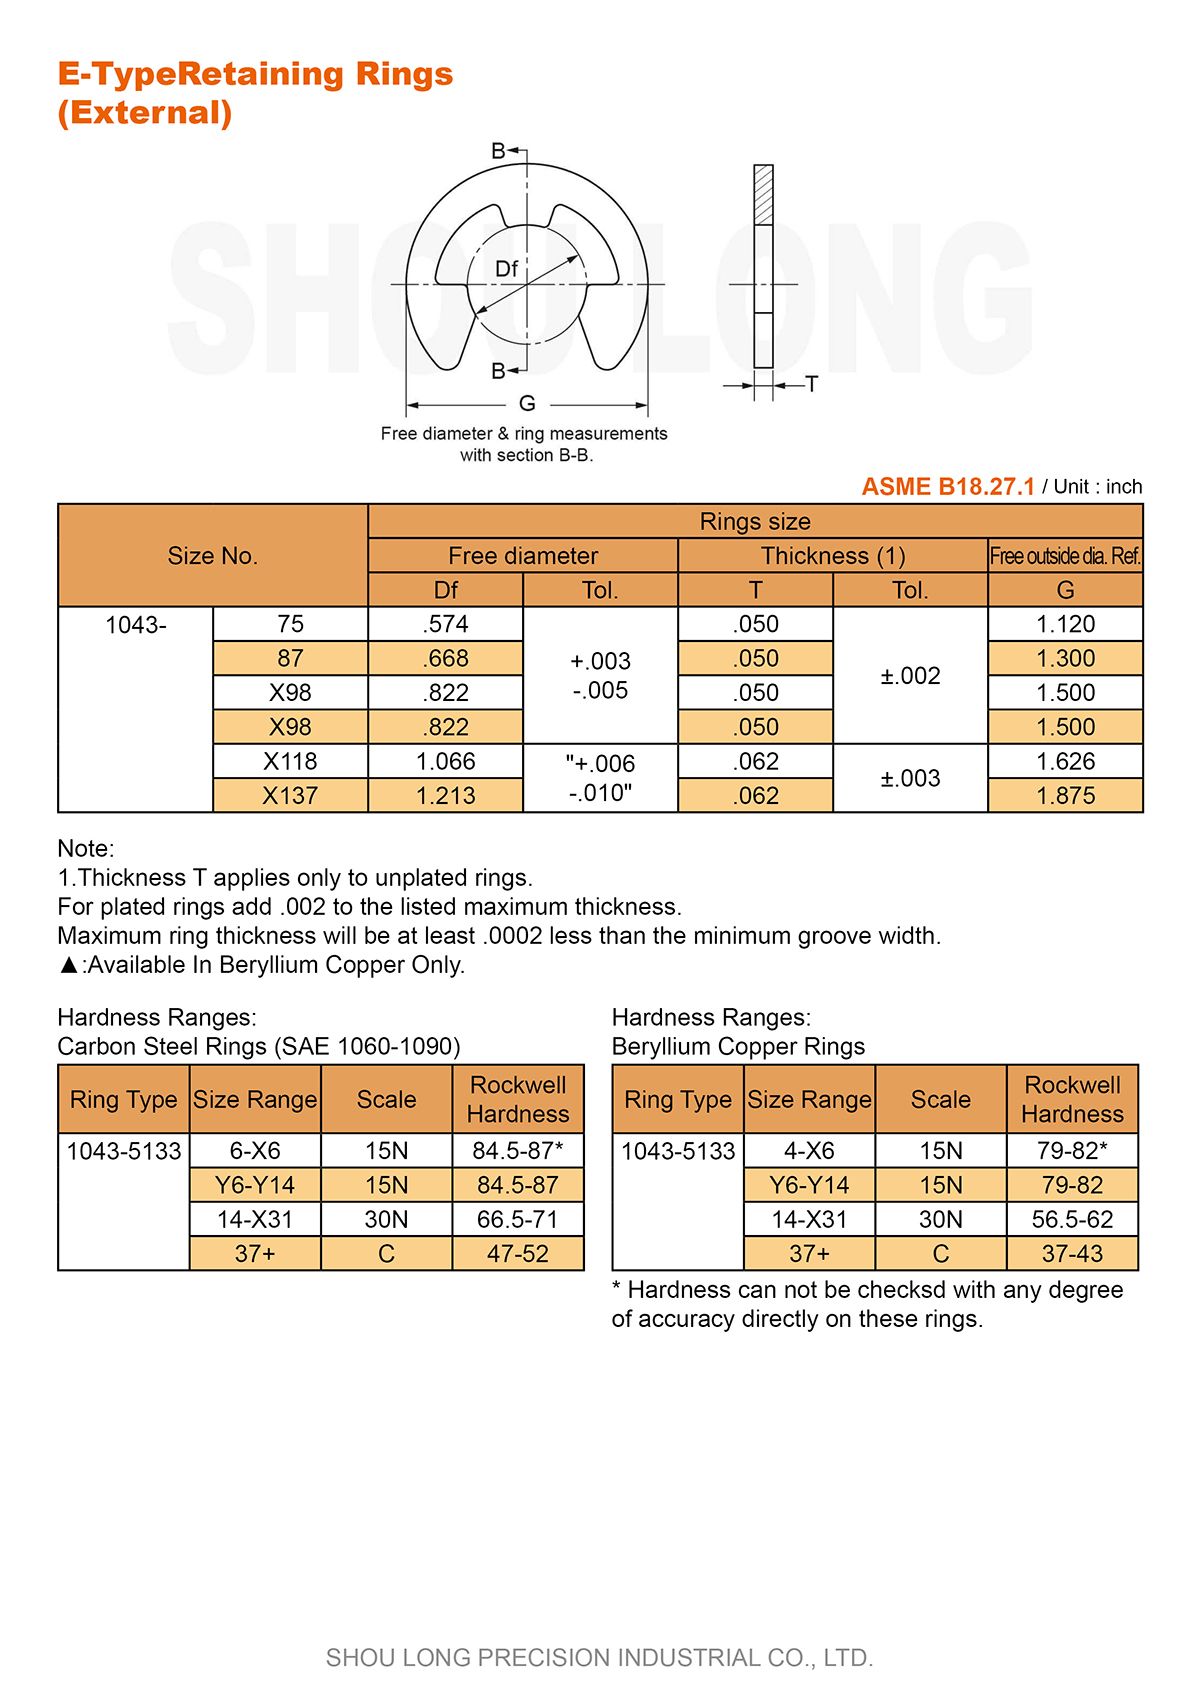 Спецификация дюймовых крепежных колец типа E для вала ASME/ANSI B18.27.1 - 2